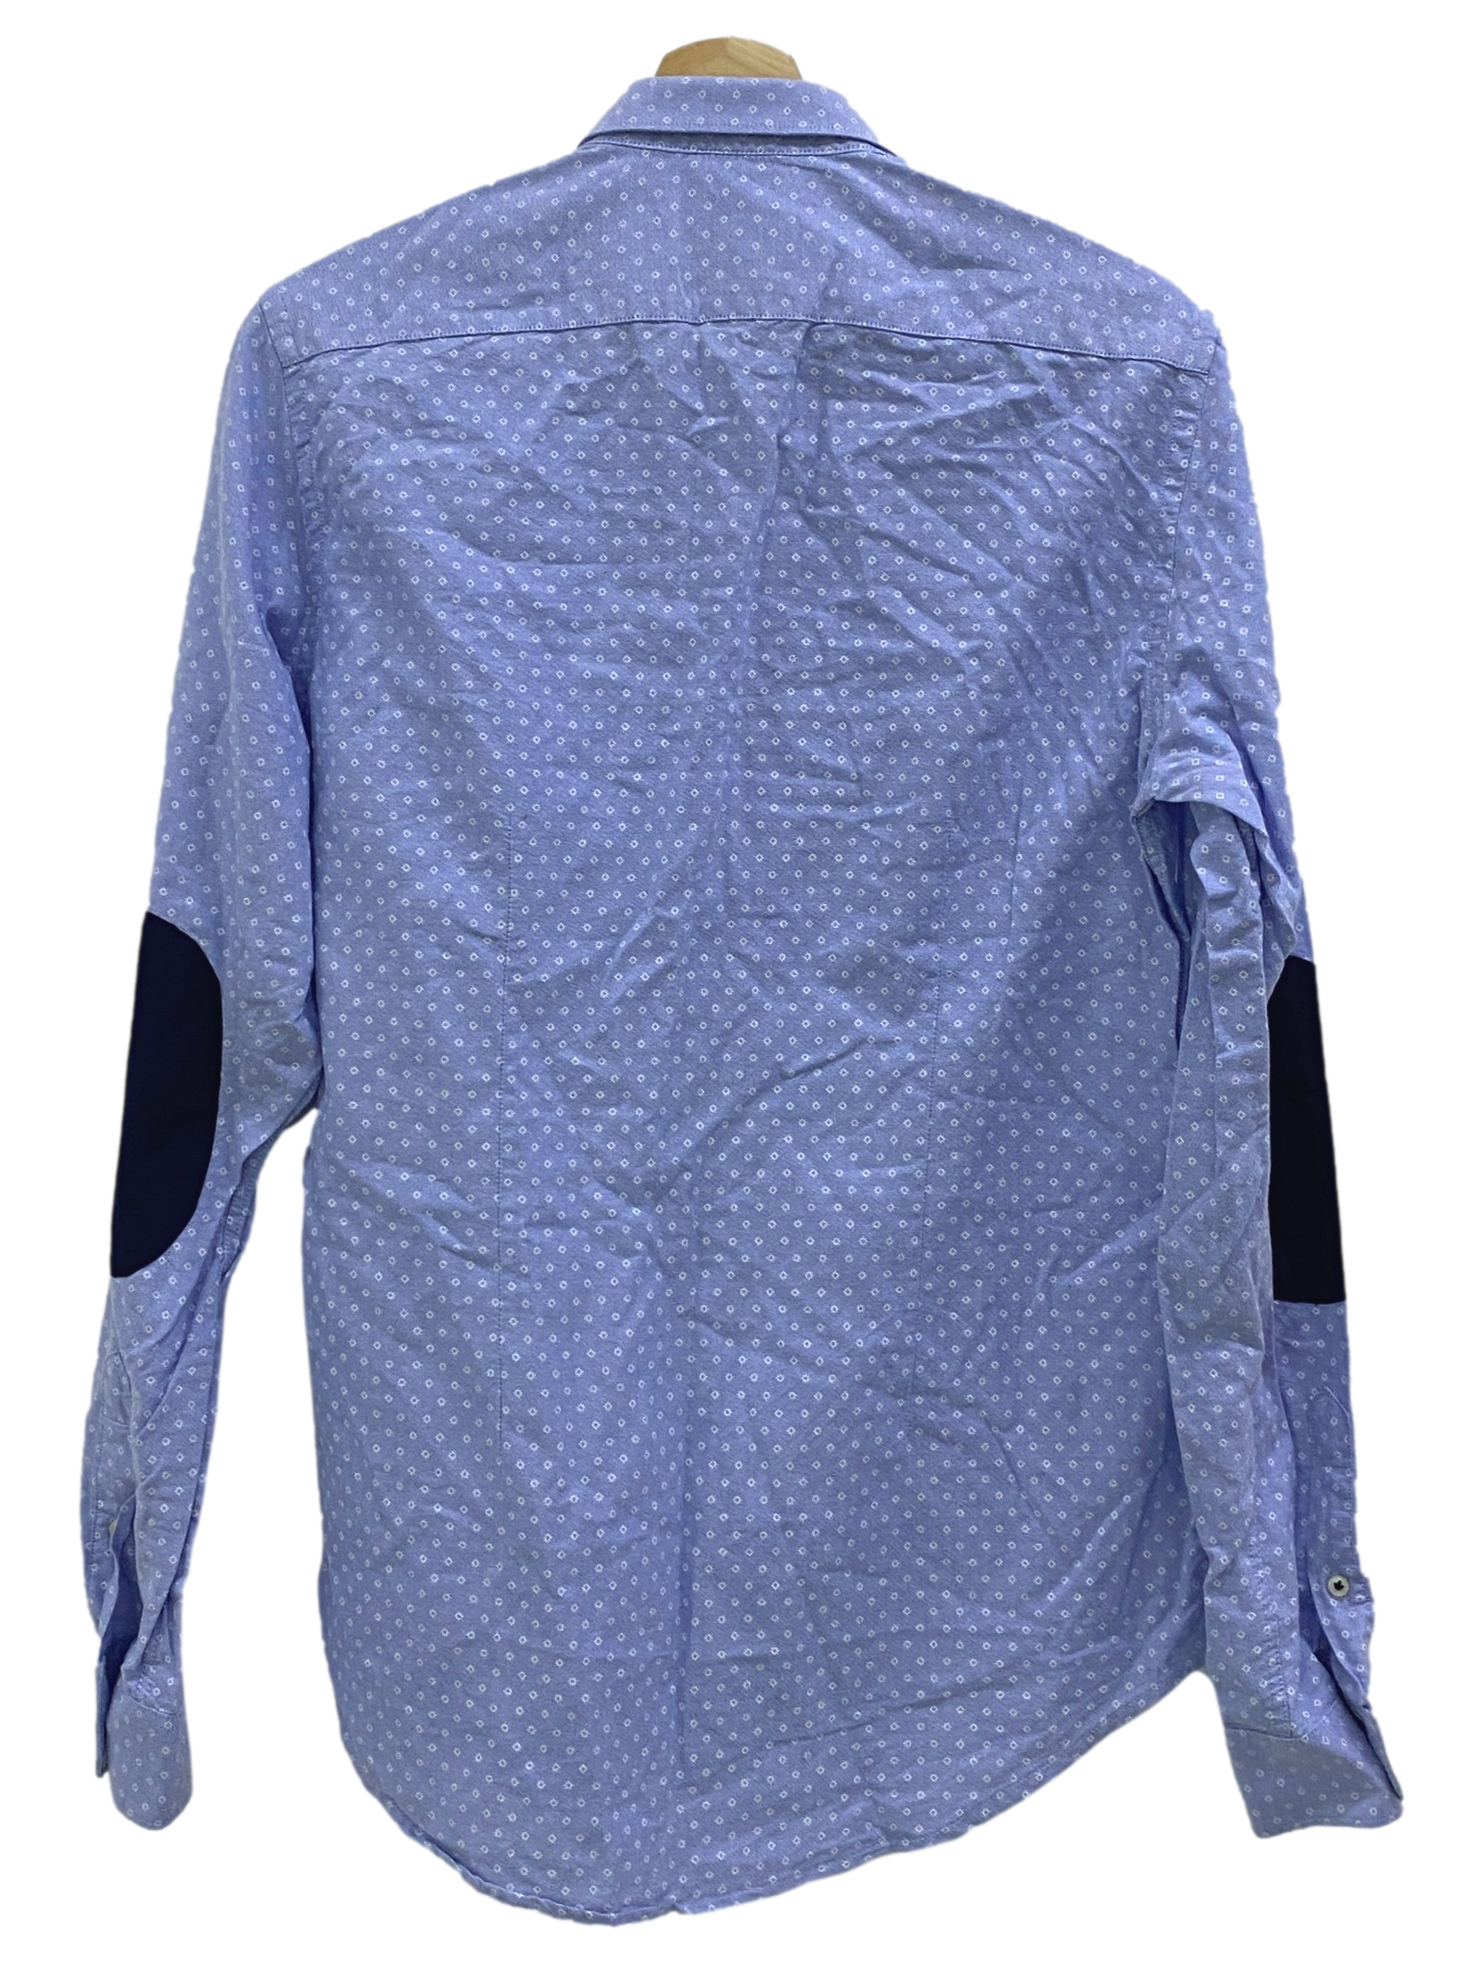 Beau Blue Patterned Shirt